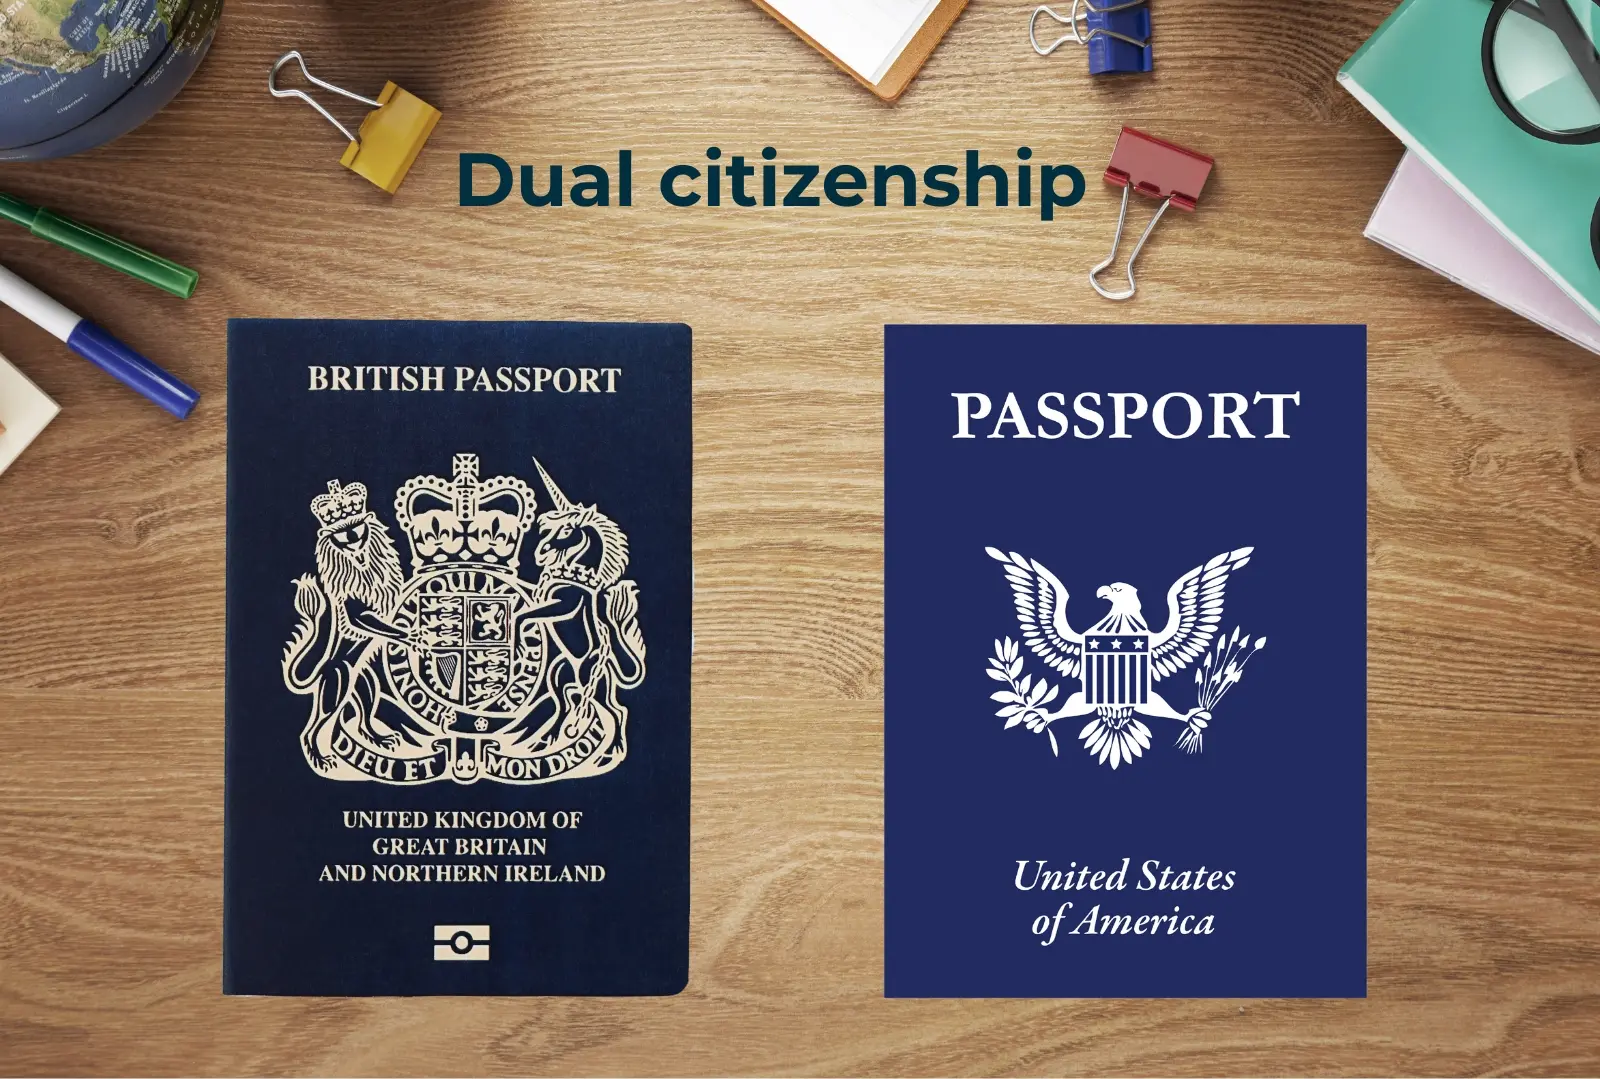 Advantages and disadvantages of dual citizenship UK.